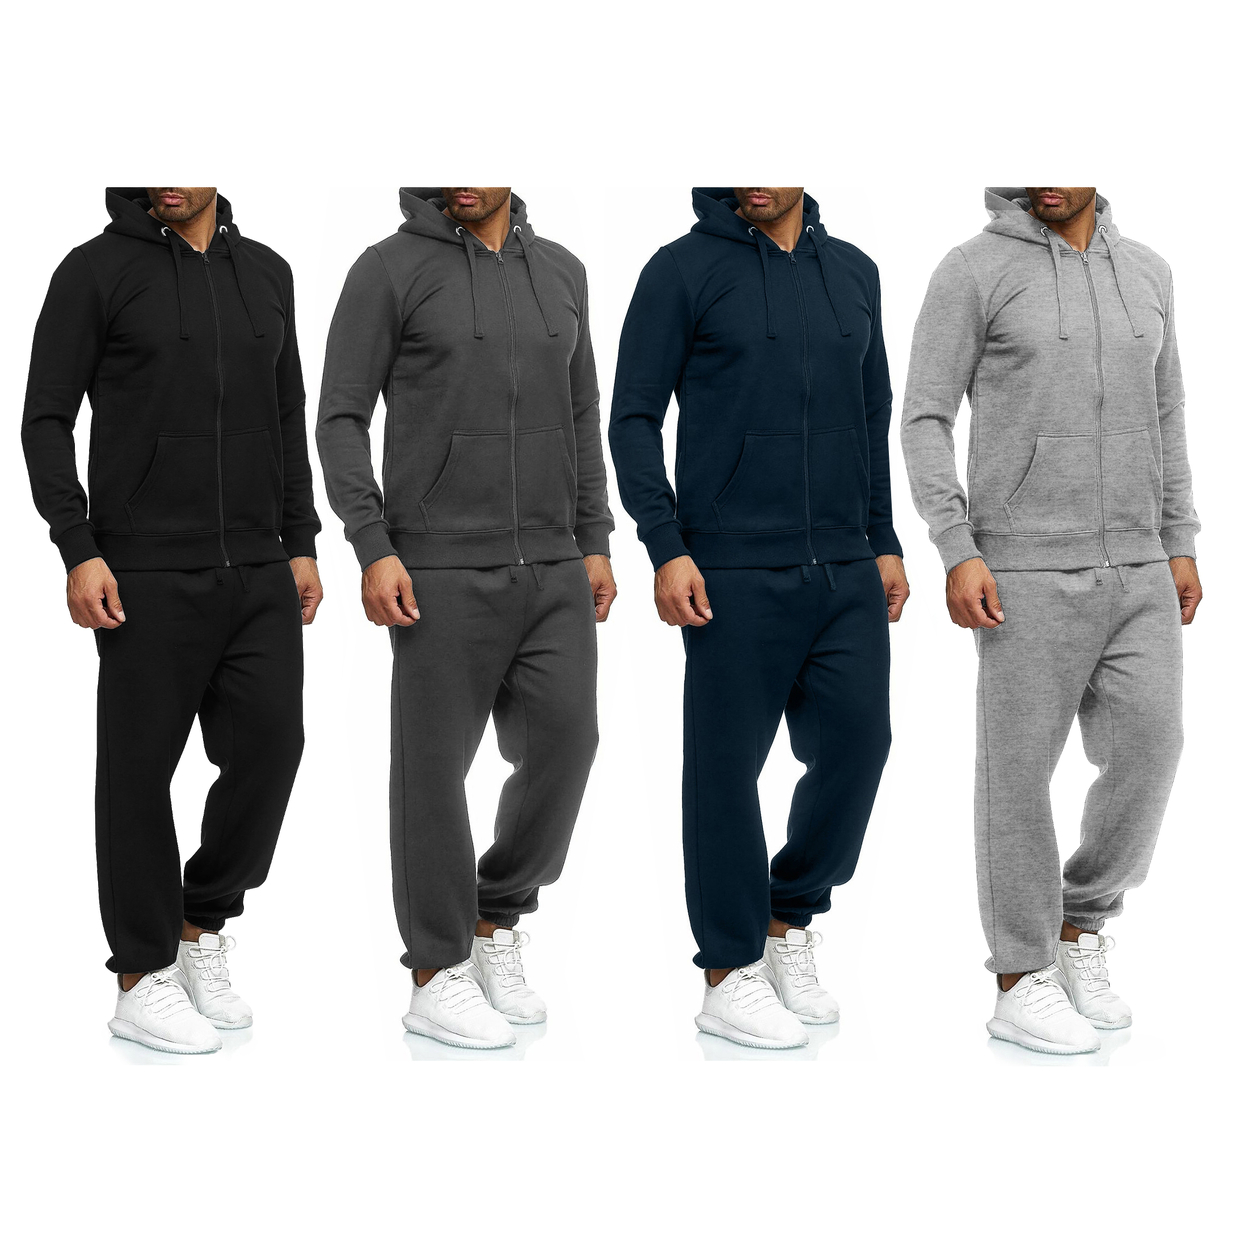 2/4-Piece: Men's Winter Warm Cozy Athletic Multi-Pockets BIG & TALL Sweatsuit Set - Grey, 2, X-large